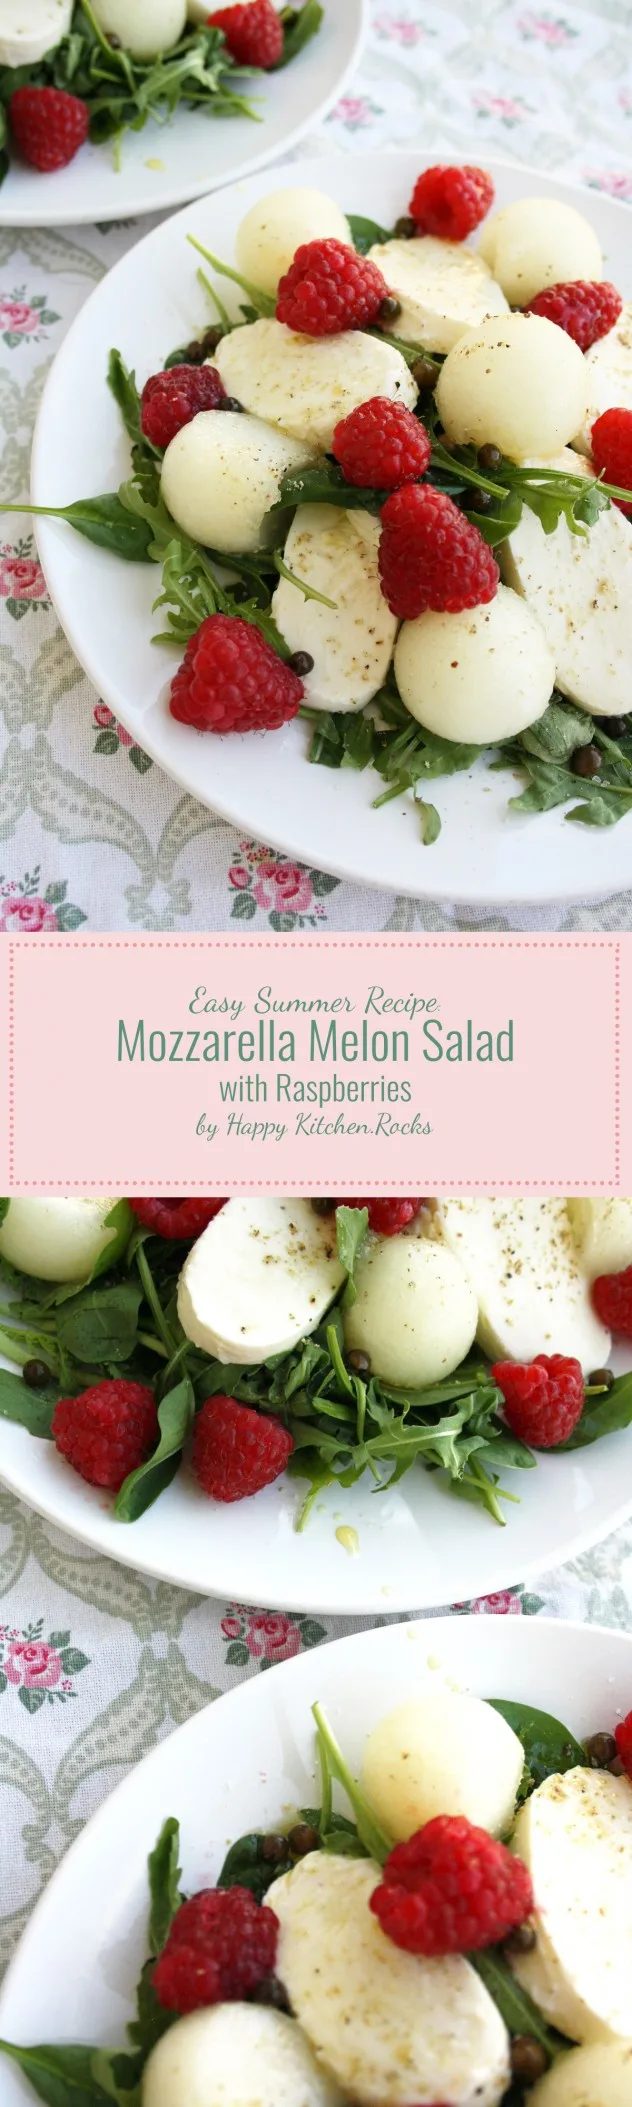 Mozzarella Melon Salad with Raspberries - a quick summer melon salad recipe with mozzarella, baby spinach, arugula and raspberries.